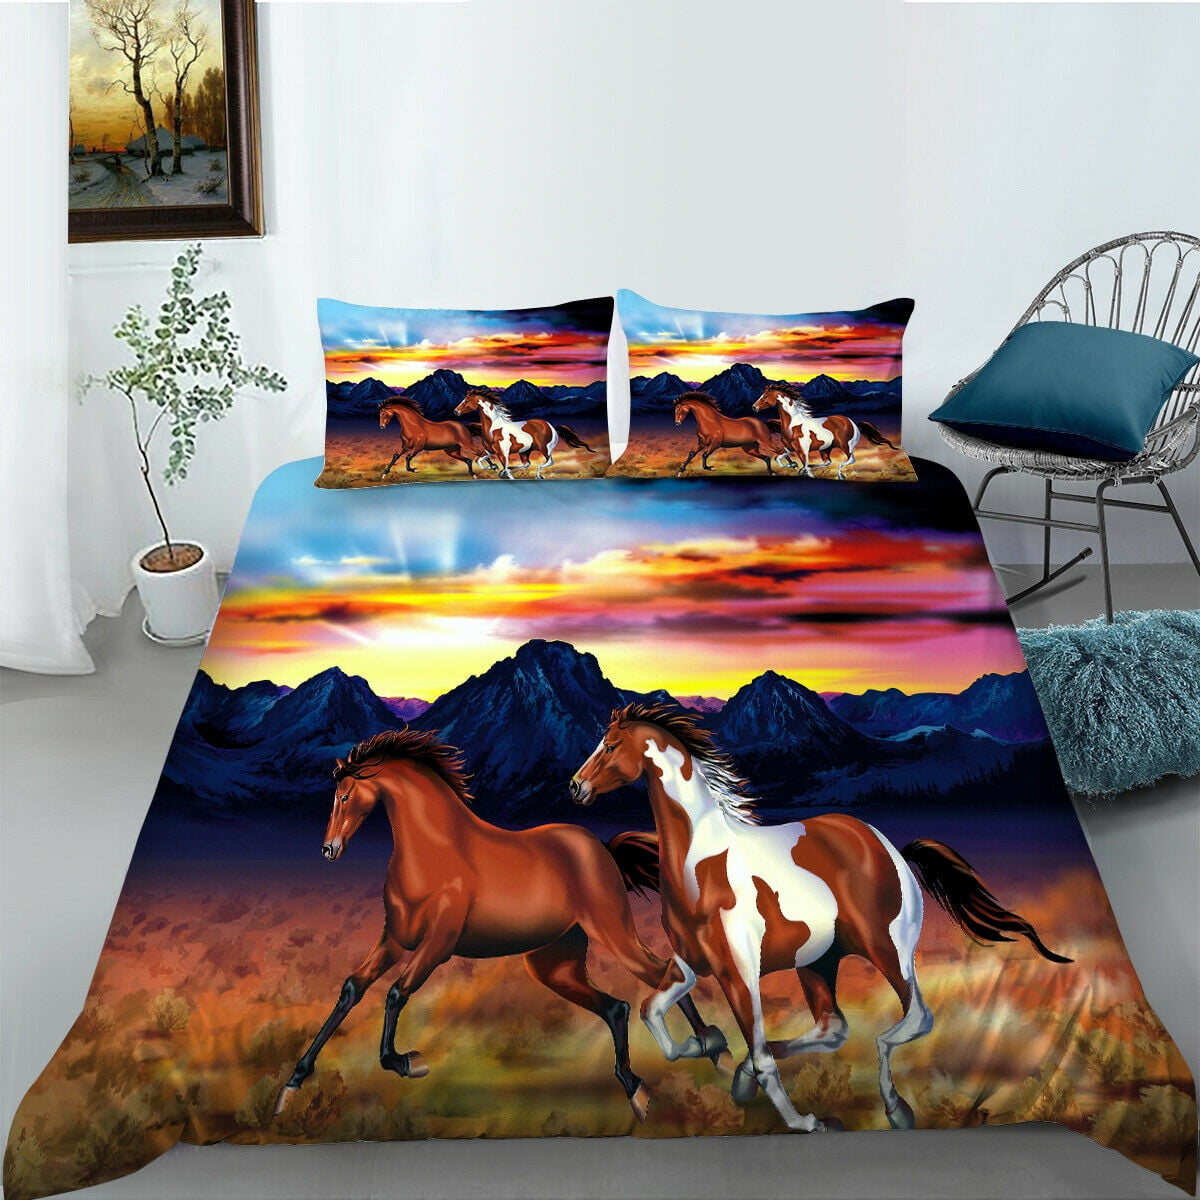 Bedding Cover Set 3D Horse Printed Quilt Cover Set Pillowcase Fashion Duvet Cover  Set Home Textiles,California King (98